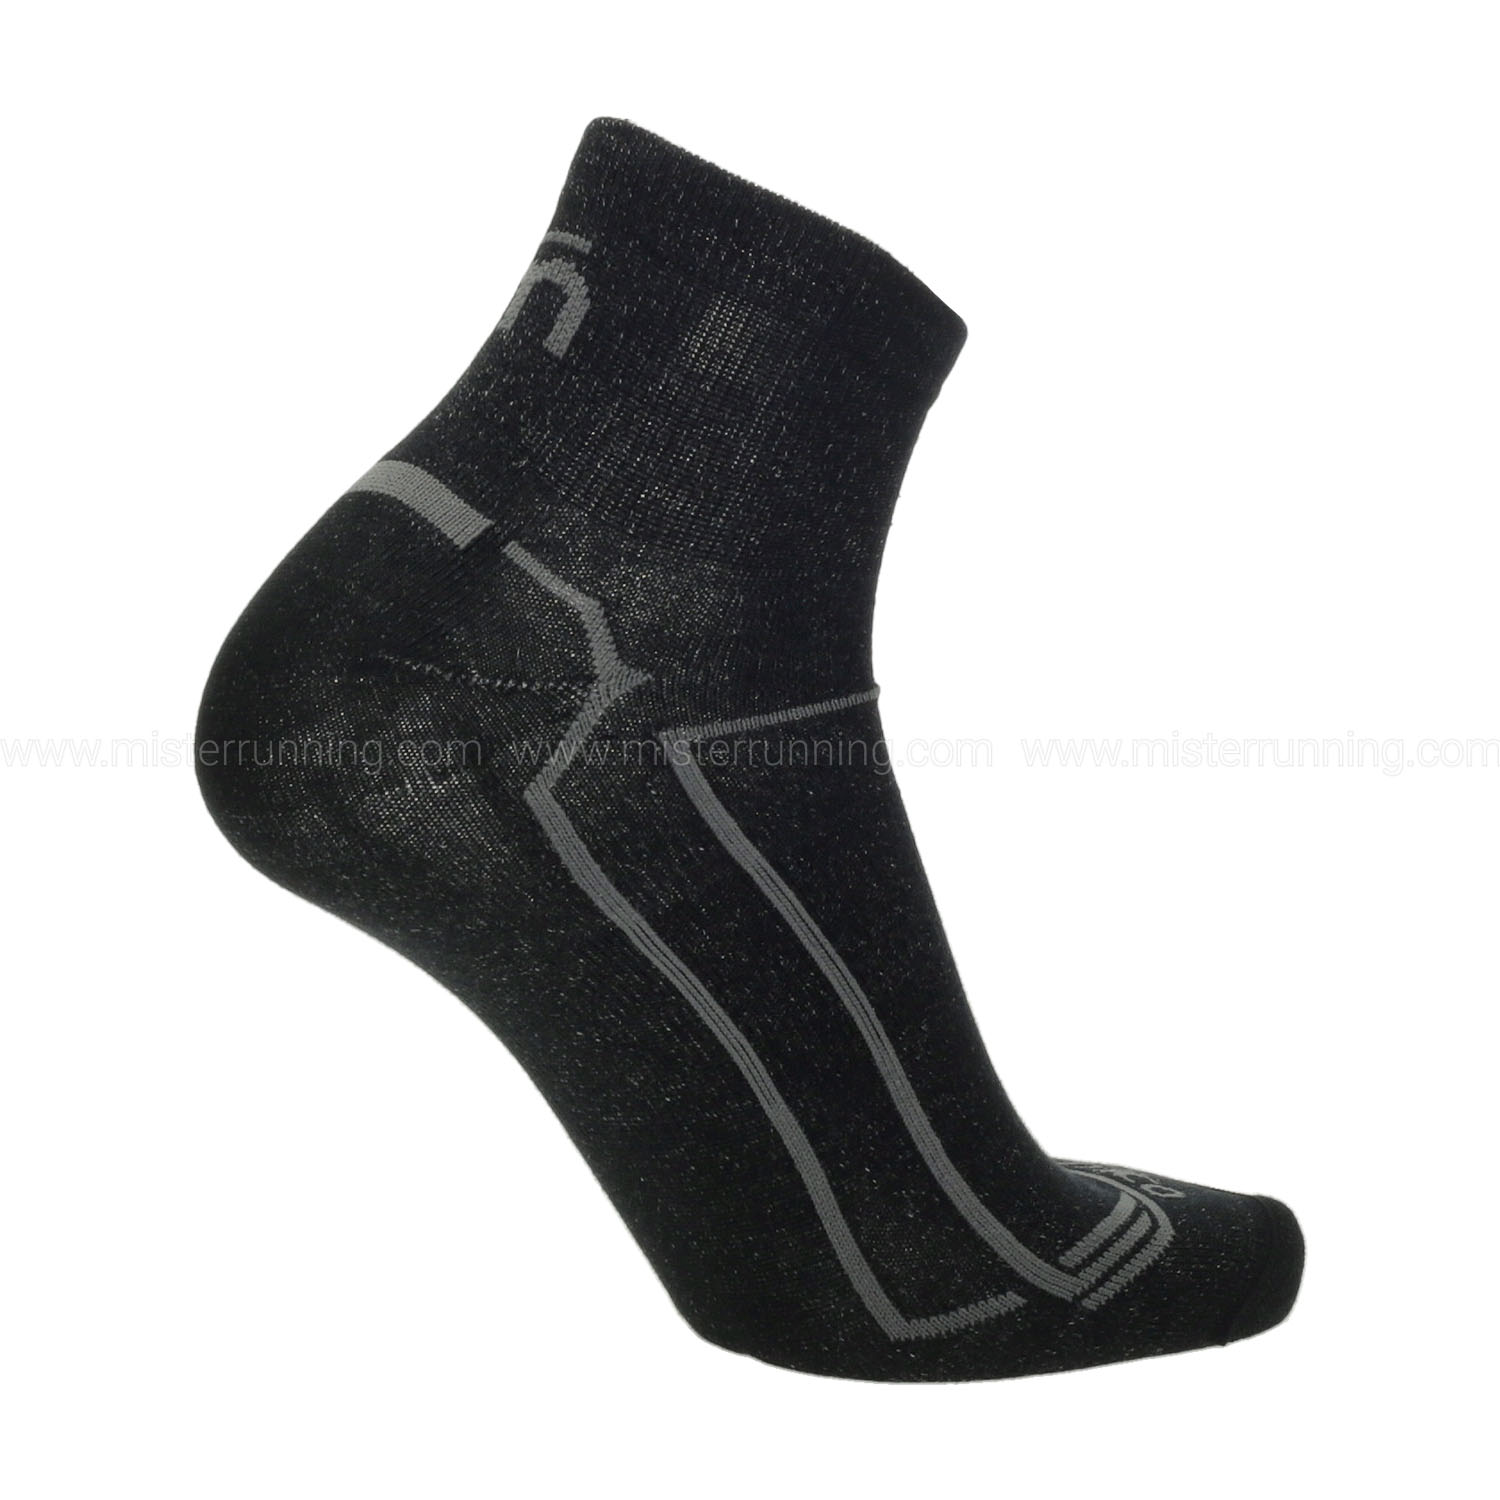 Mico Odor Zero Outlast Light Weight Socks - Nero/Grigio